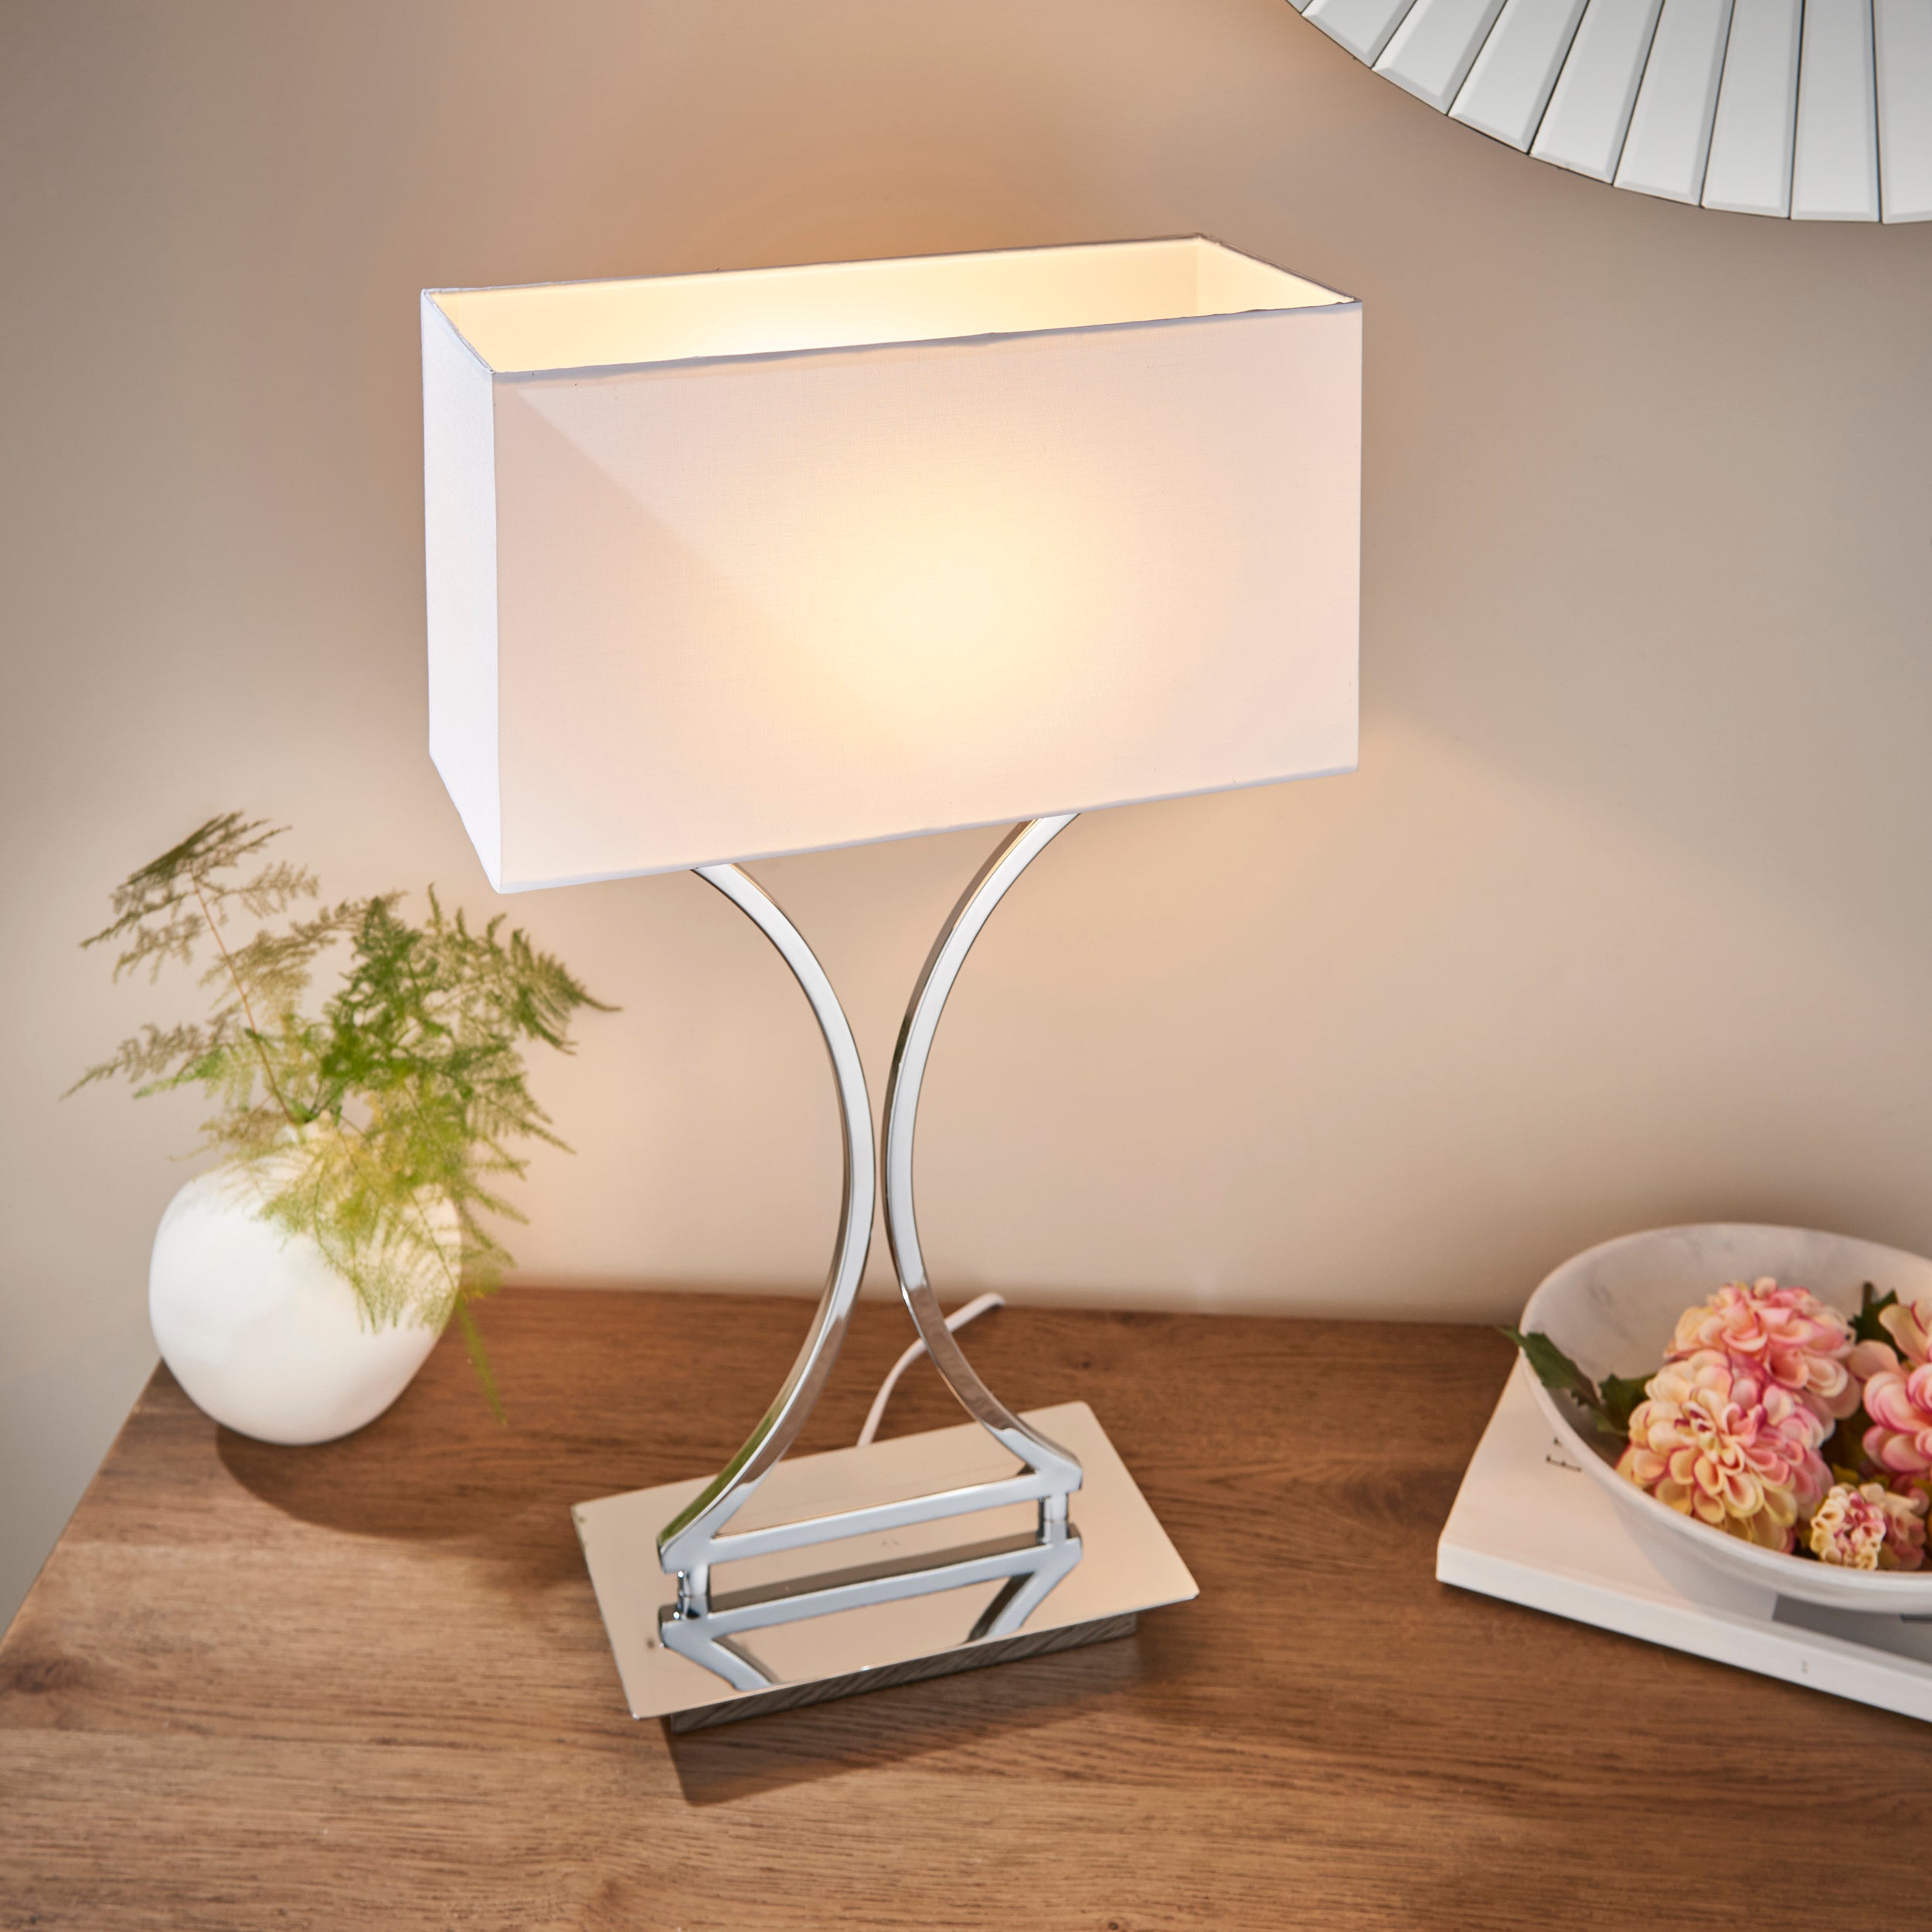 Epalle Chrome Table Lamp